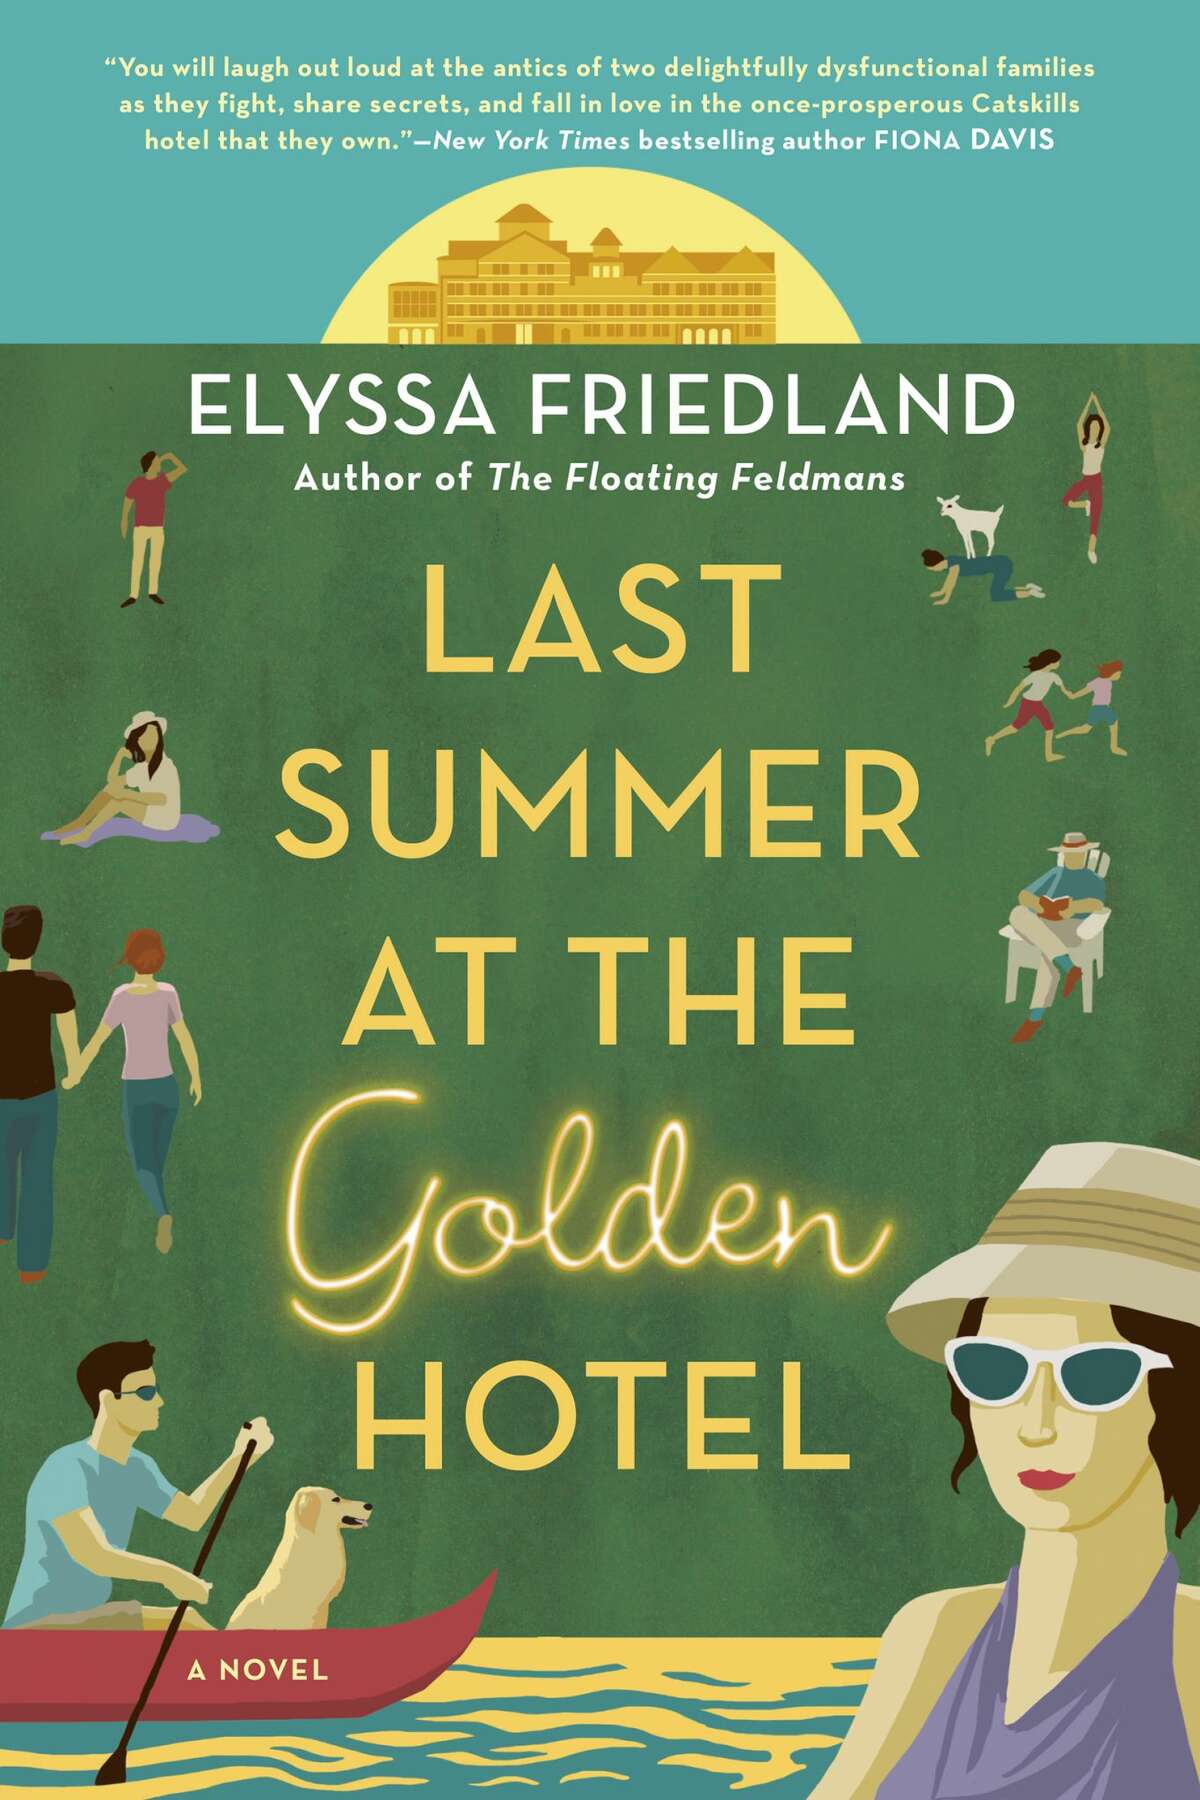 "Last Summer at the Golden Hotel" is Elyssa Friedland's latest novel. 